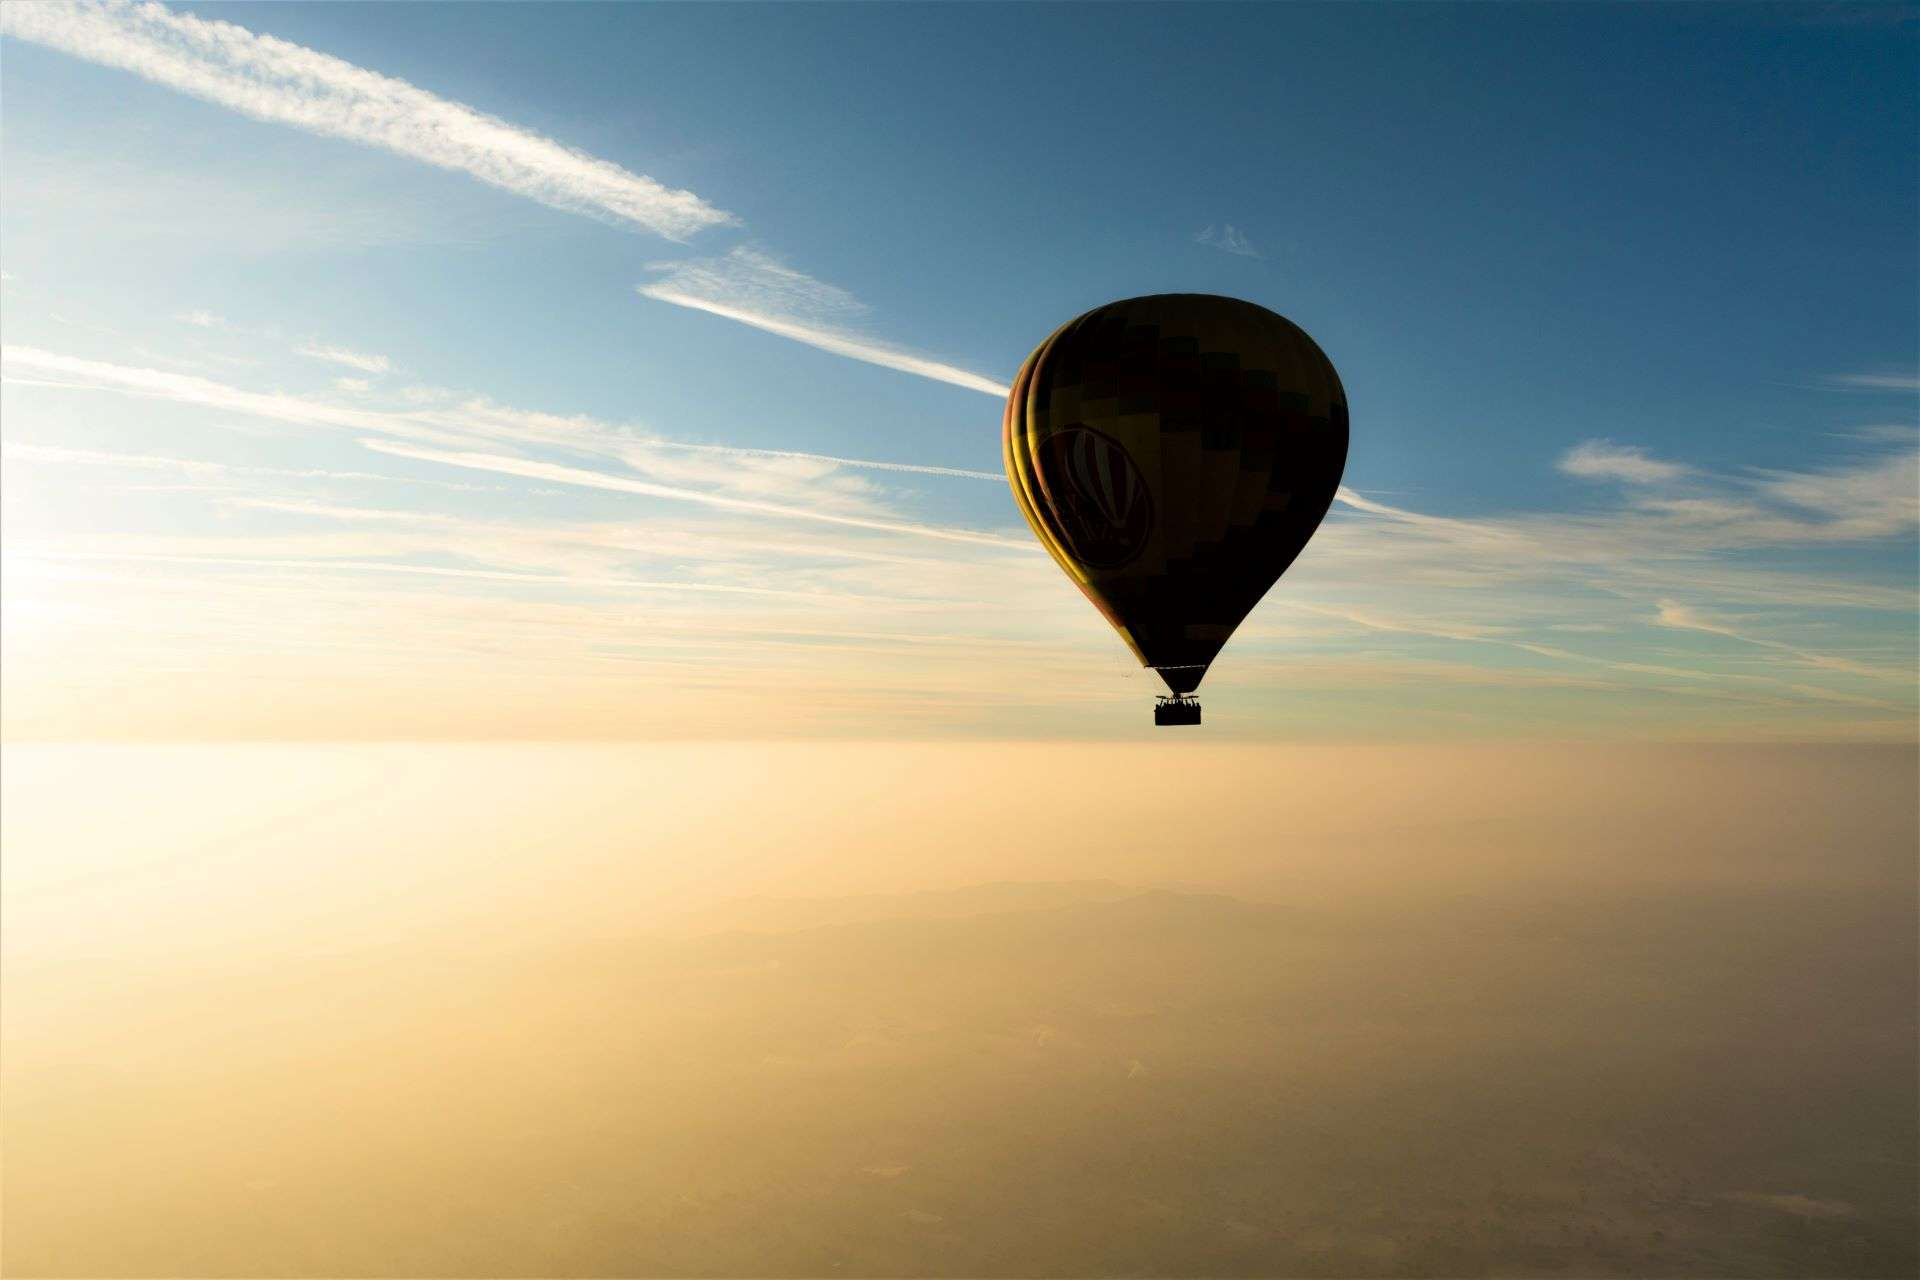 Sky Waltz Hot Air Balloon Safari in Jaipur offers a breathtaking perspective of the horizon.